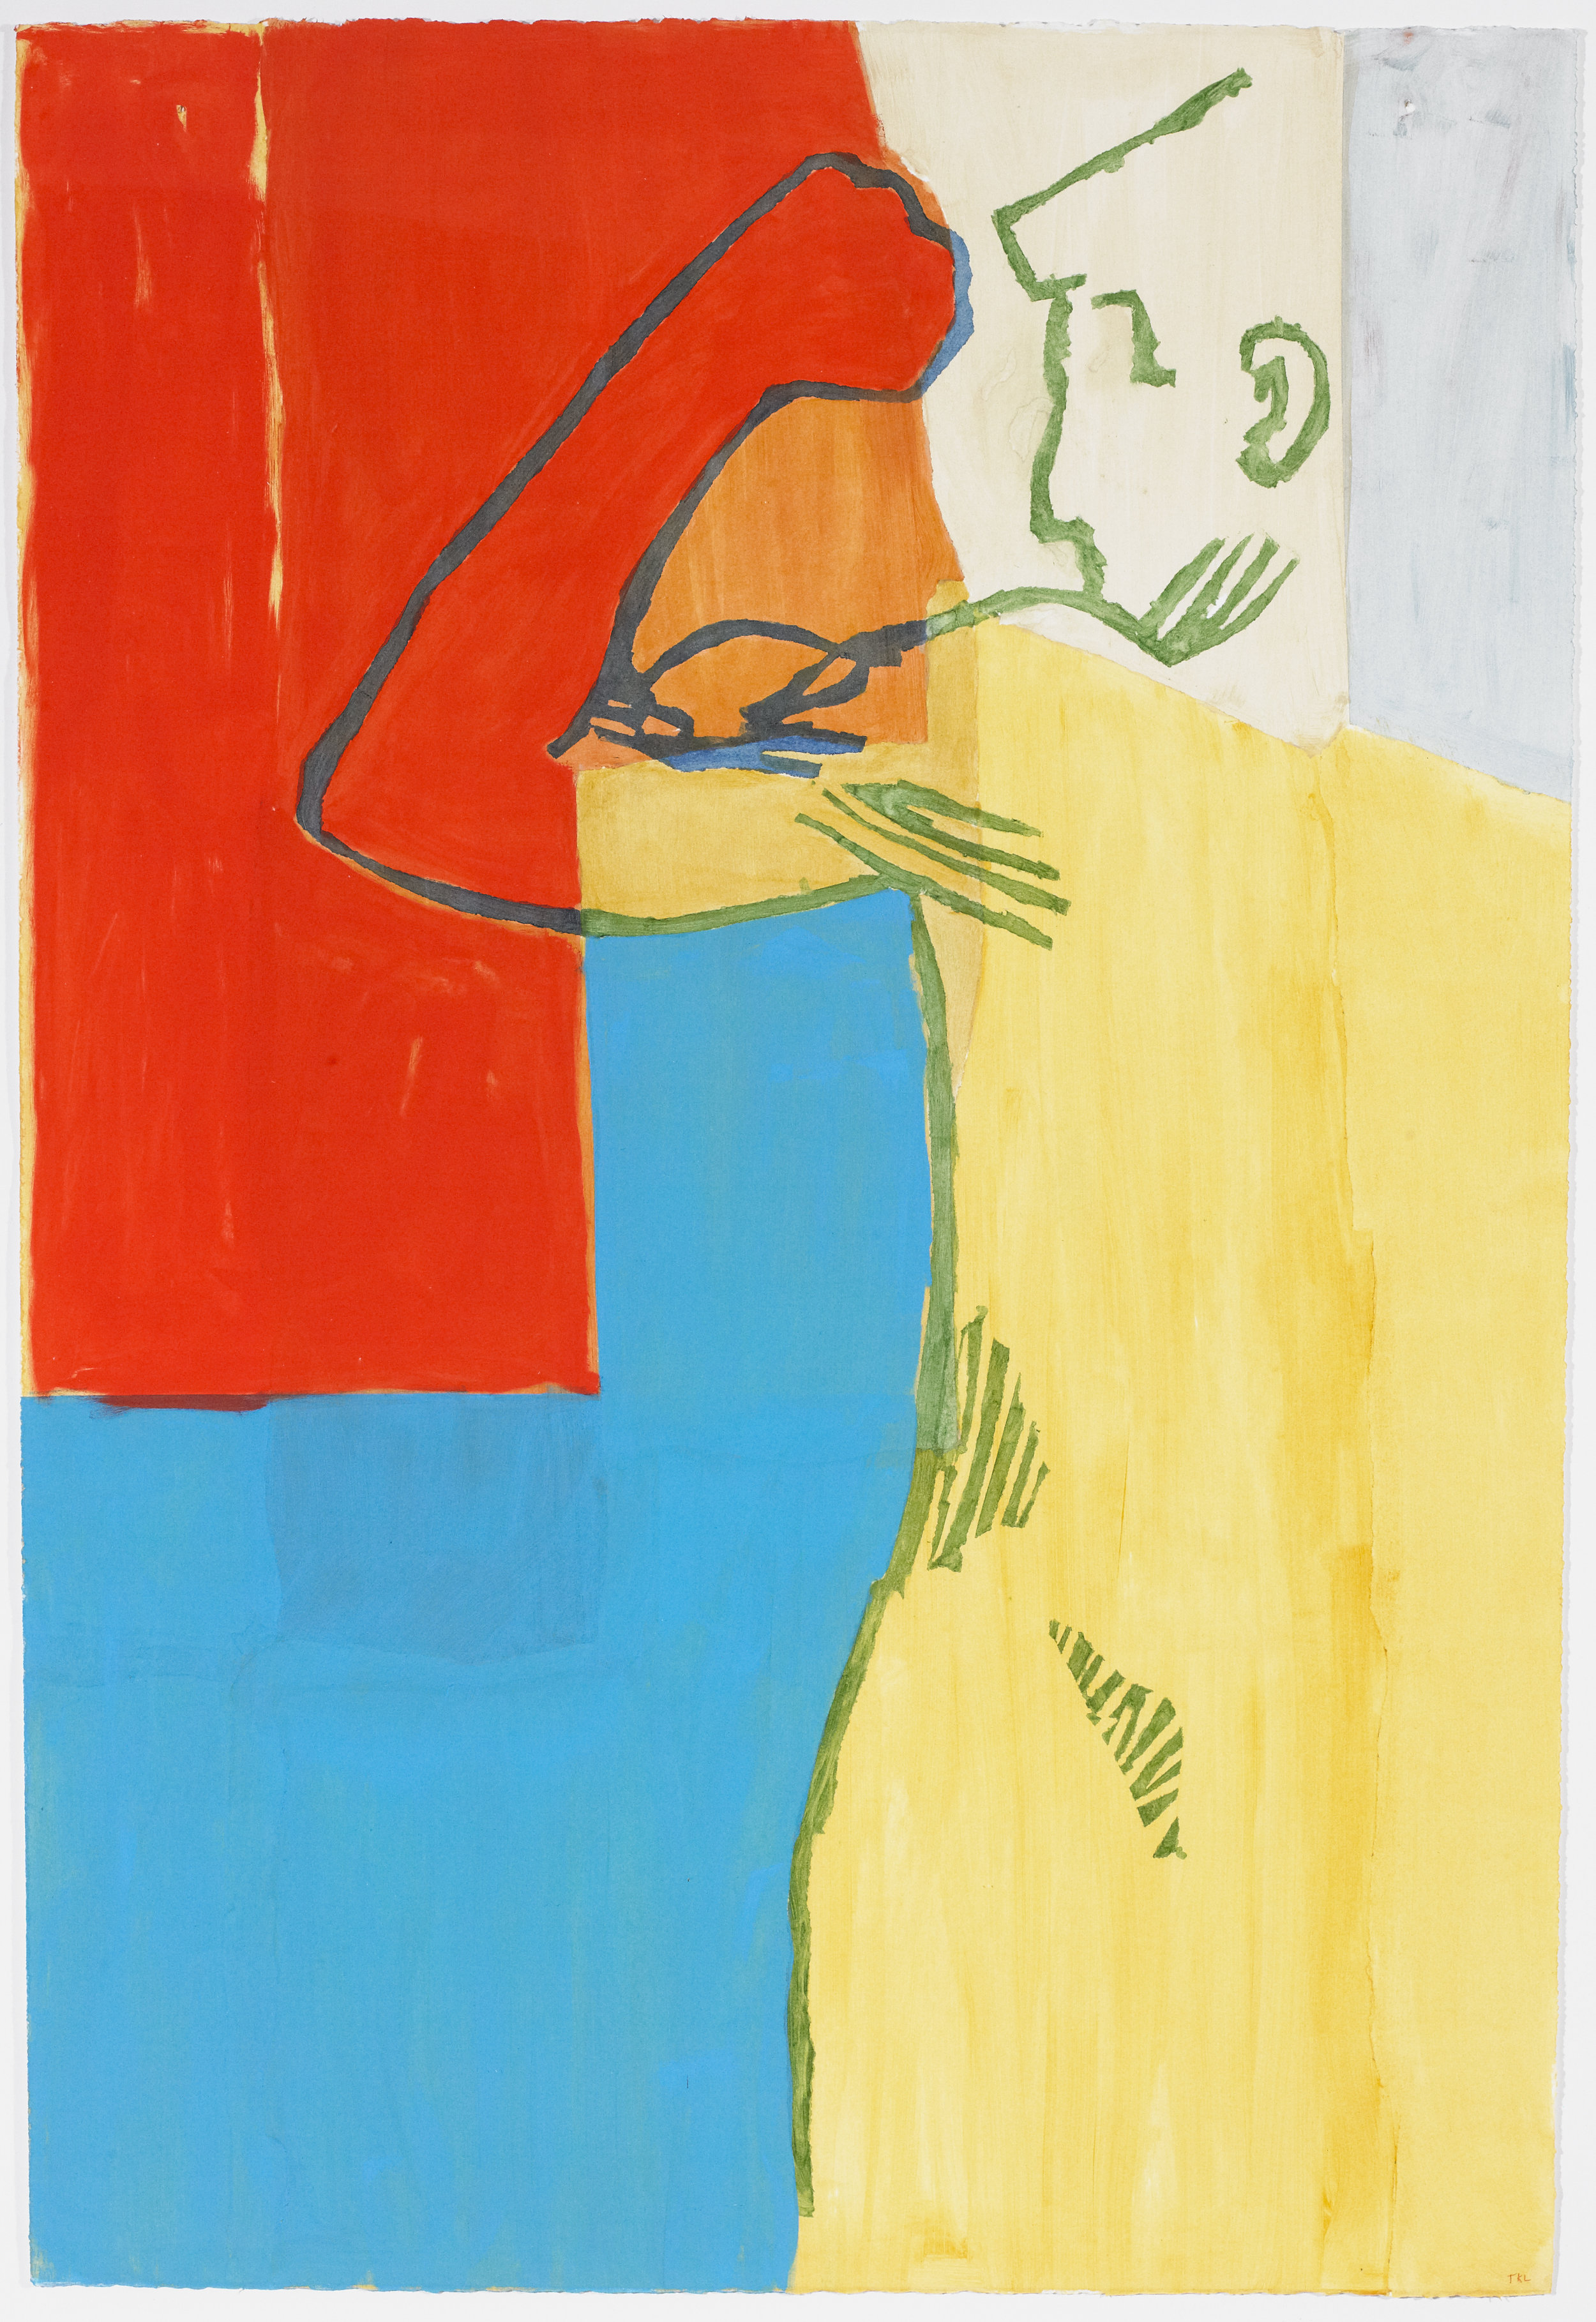   Pessoa 2 , acrylic on paper, 2016 